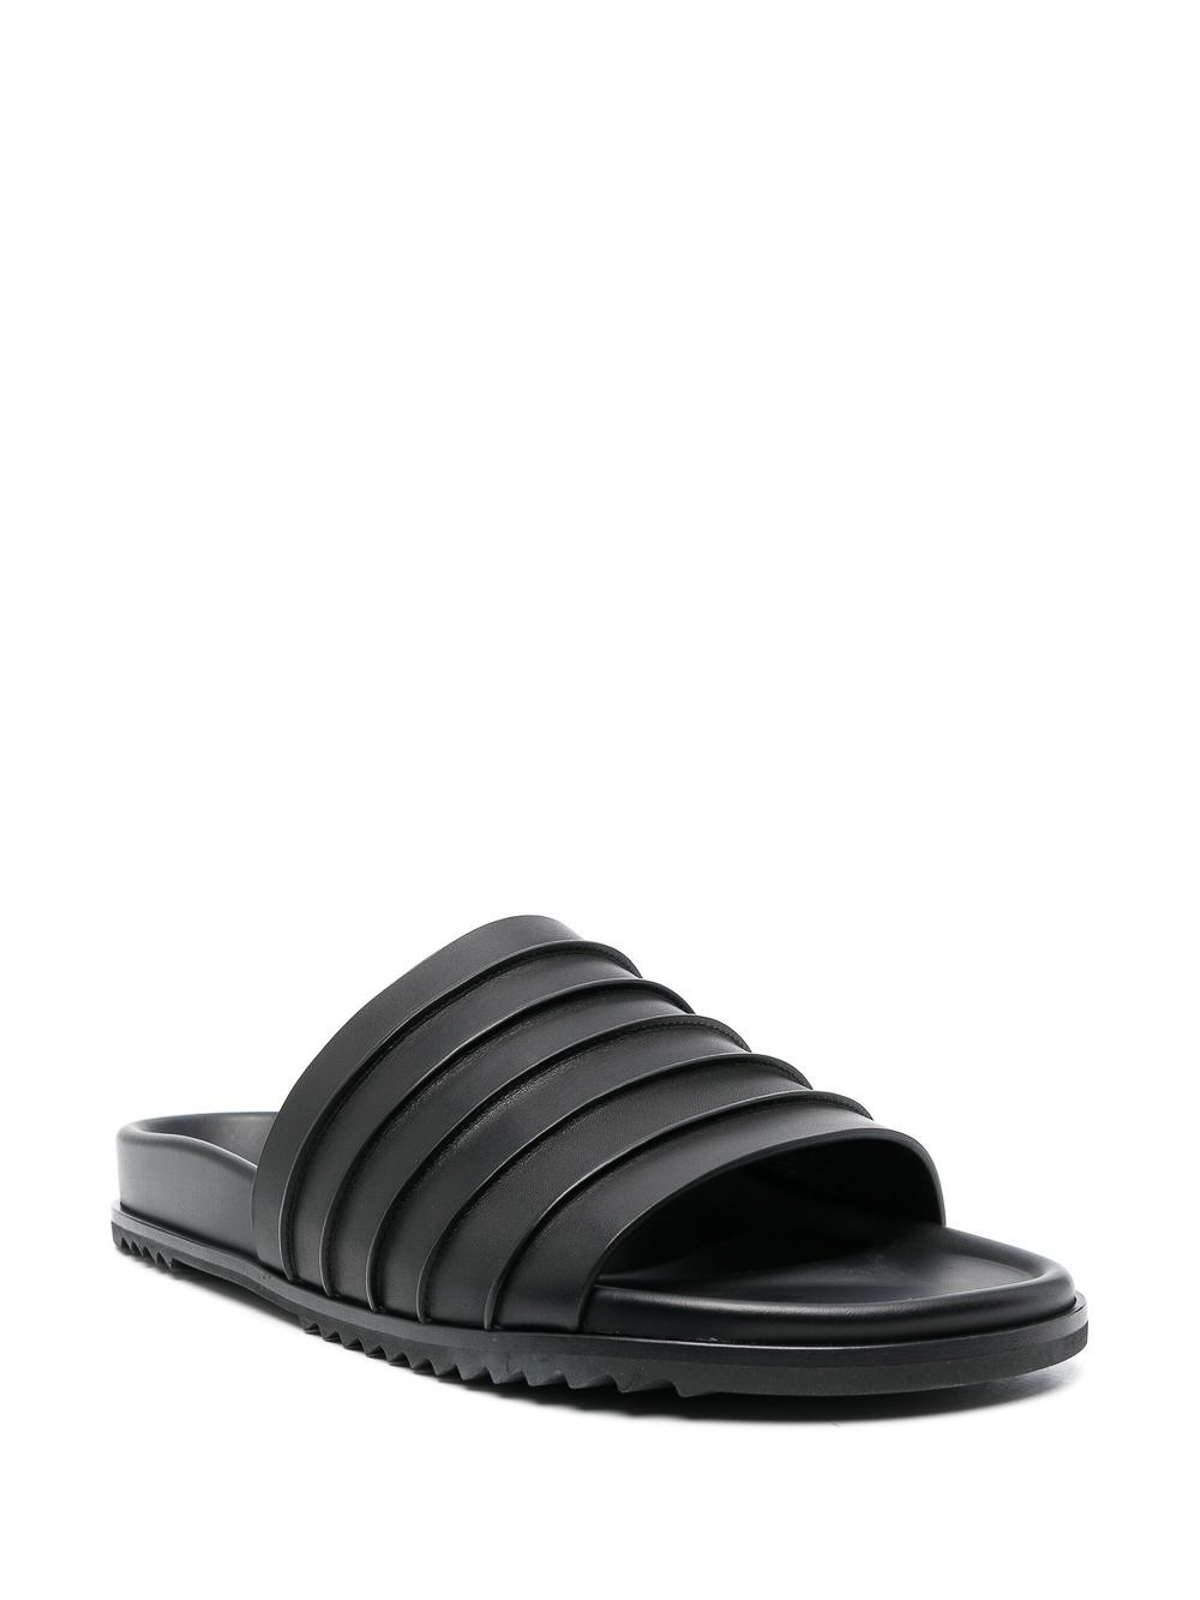 Sandals Rick Owens - Rick owens sandals black - RU01C4838LCG09